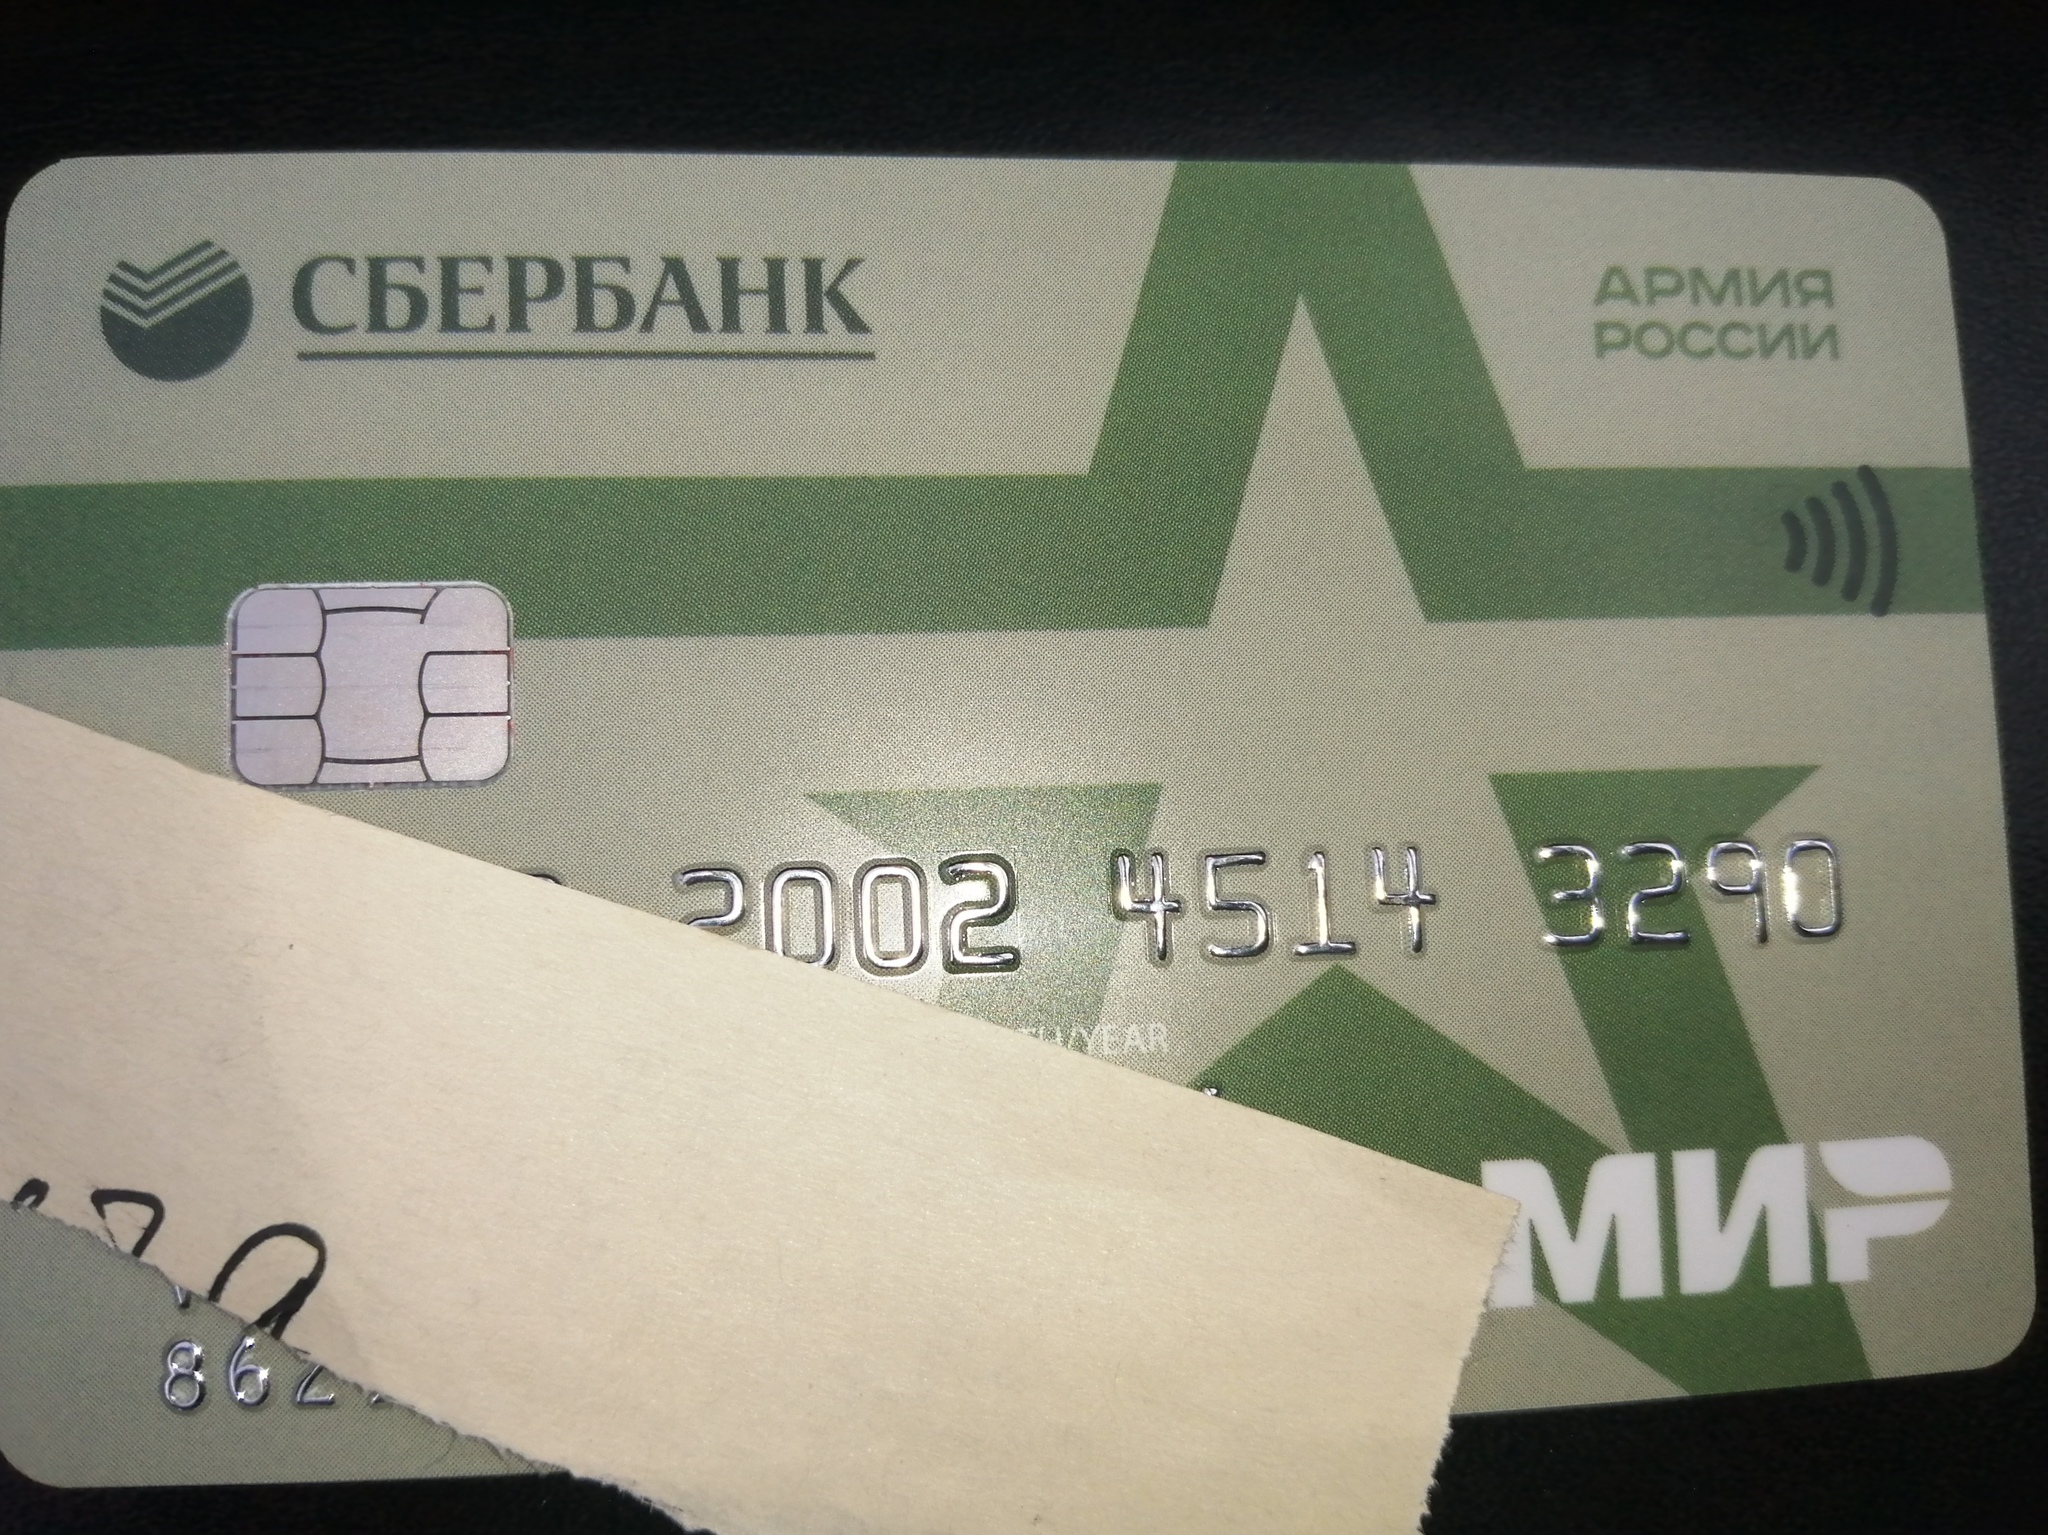 Sberbank and MIR card - My, Humor, Design, Military